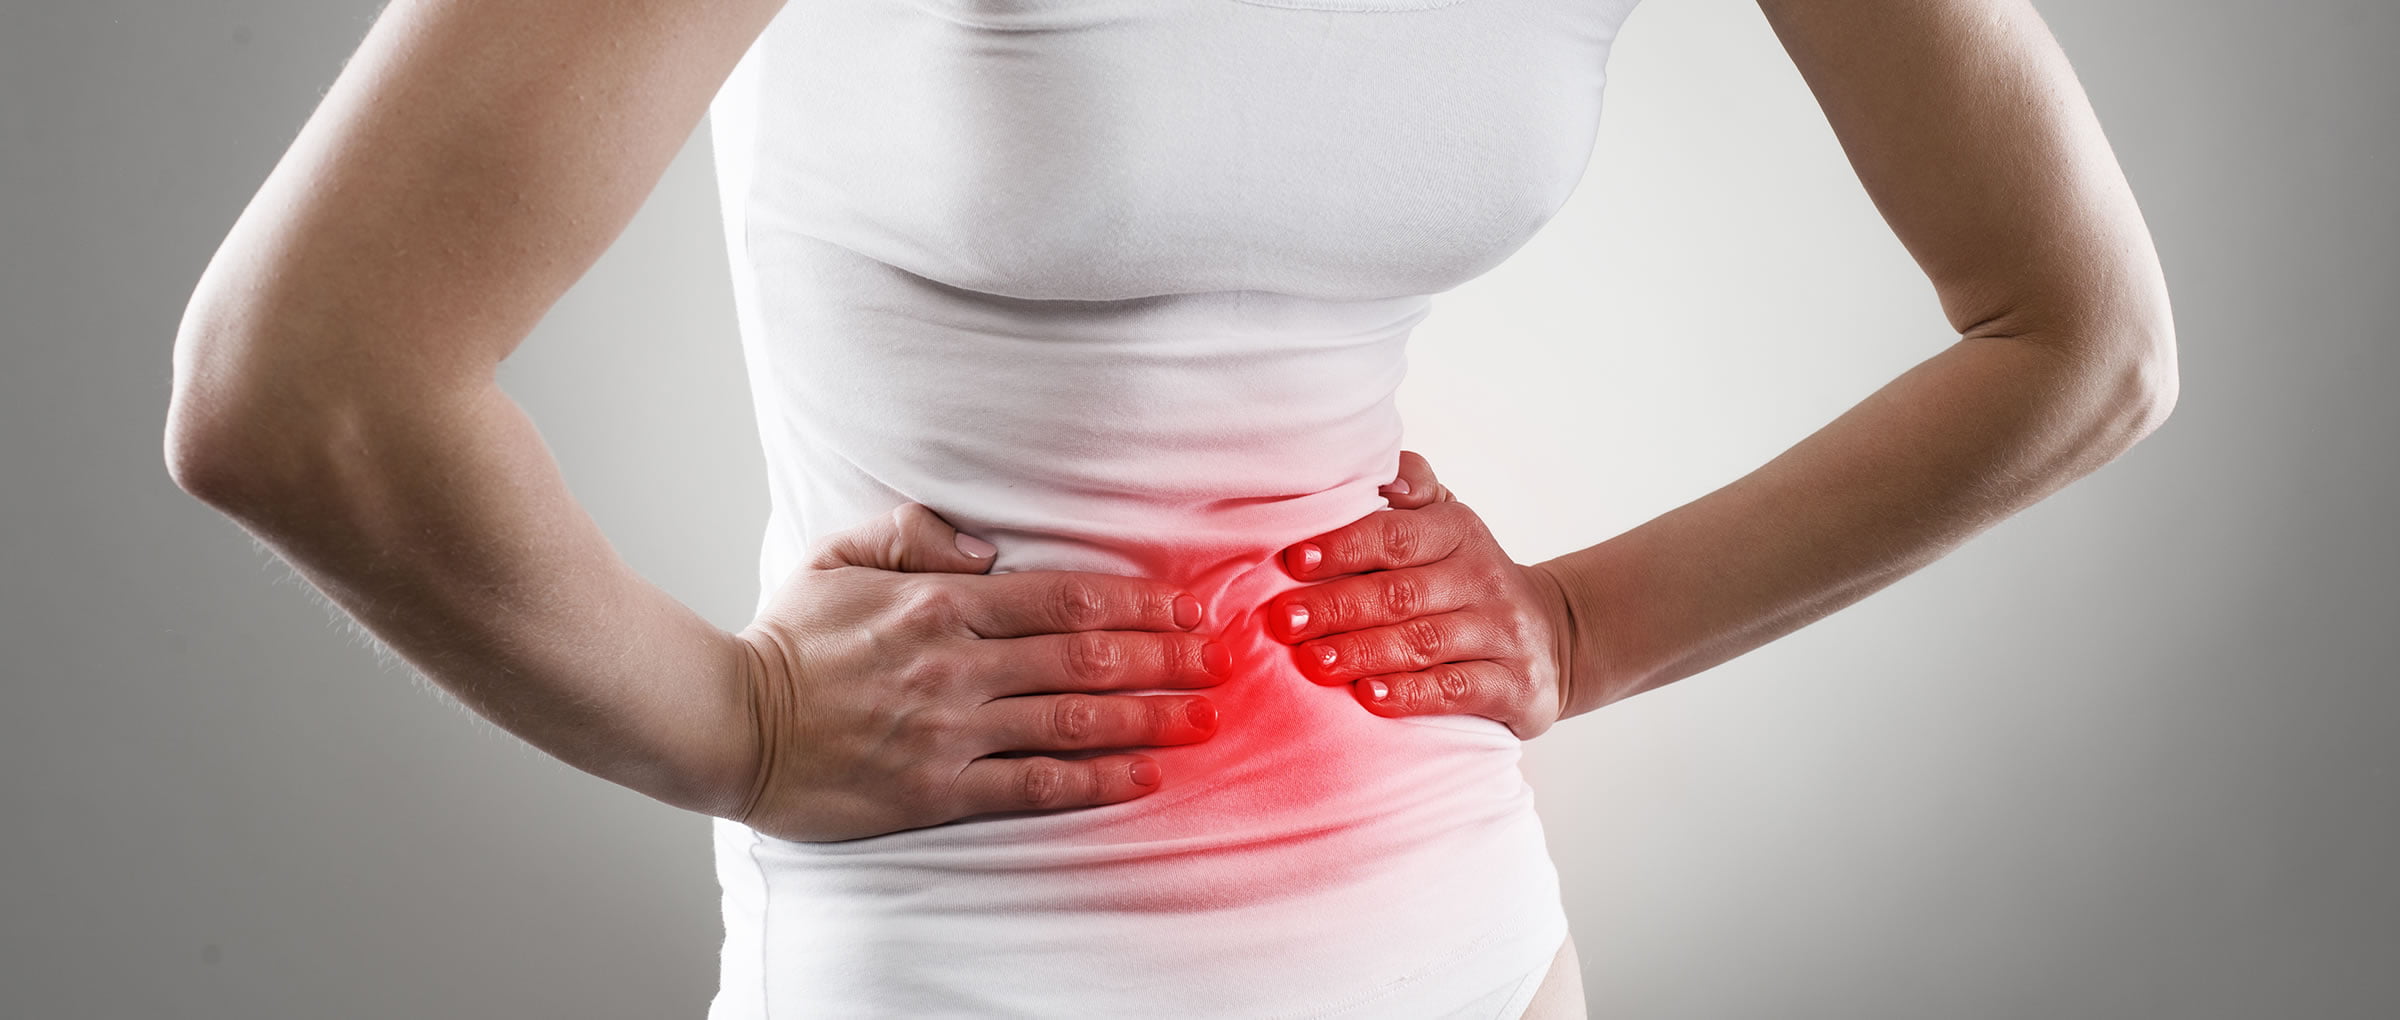 Menstrual clots may cause painful cramps